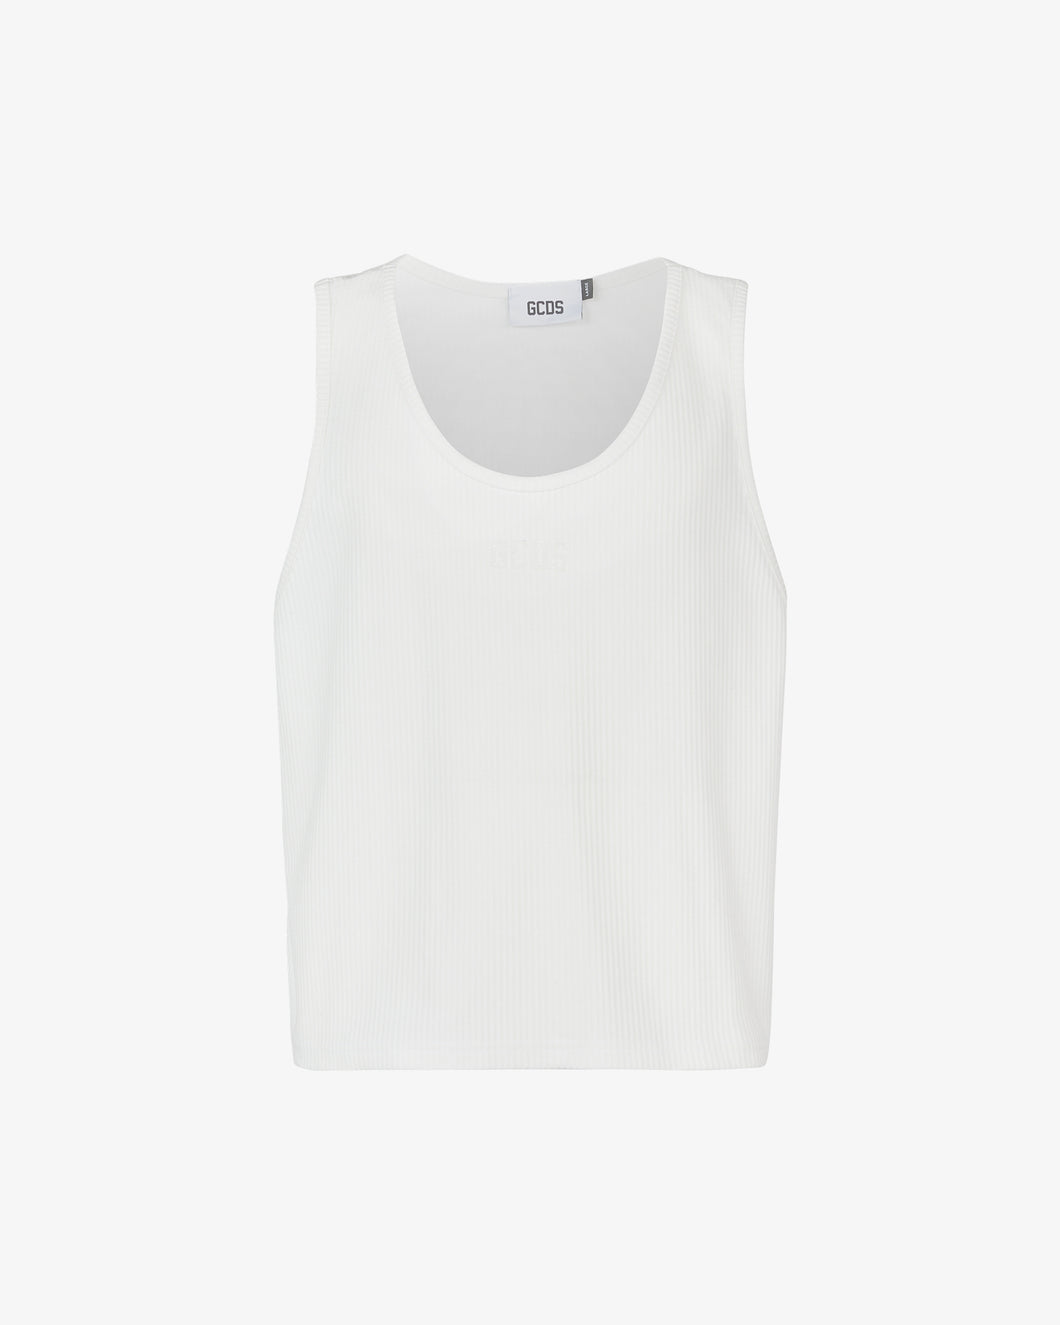 Bling Gcds Ribbed Tank Top | Men T-shirts White | GCDS®